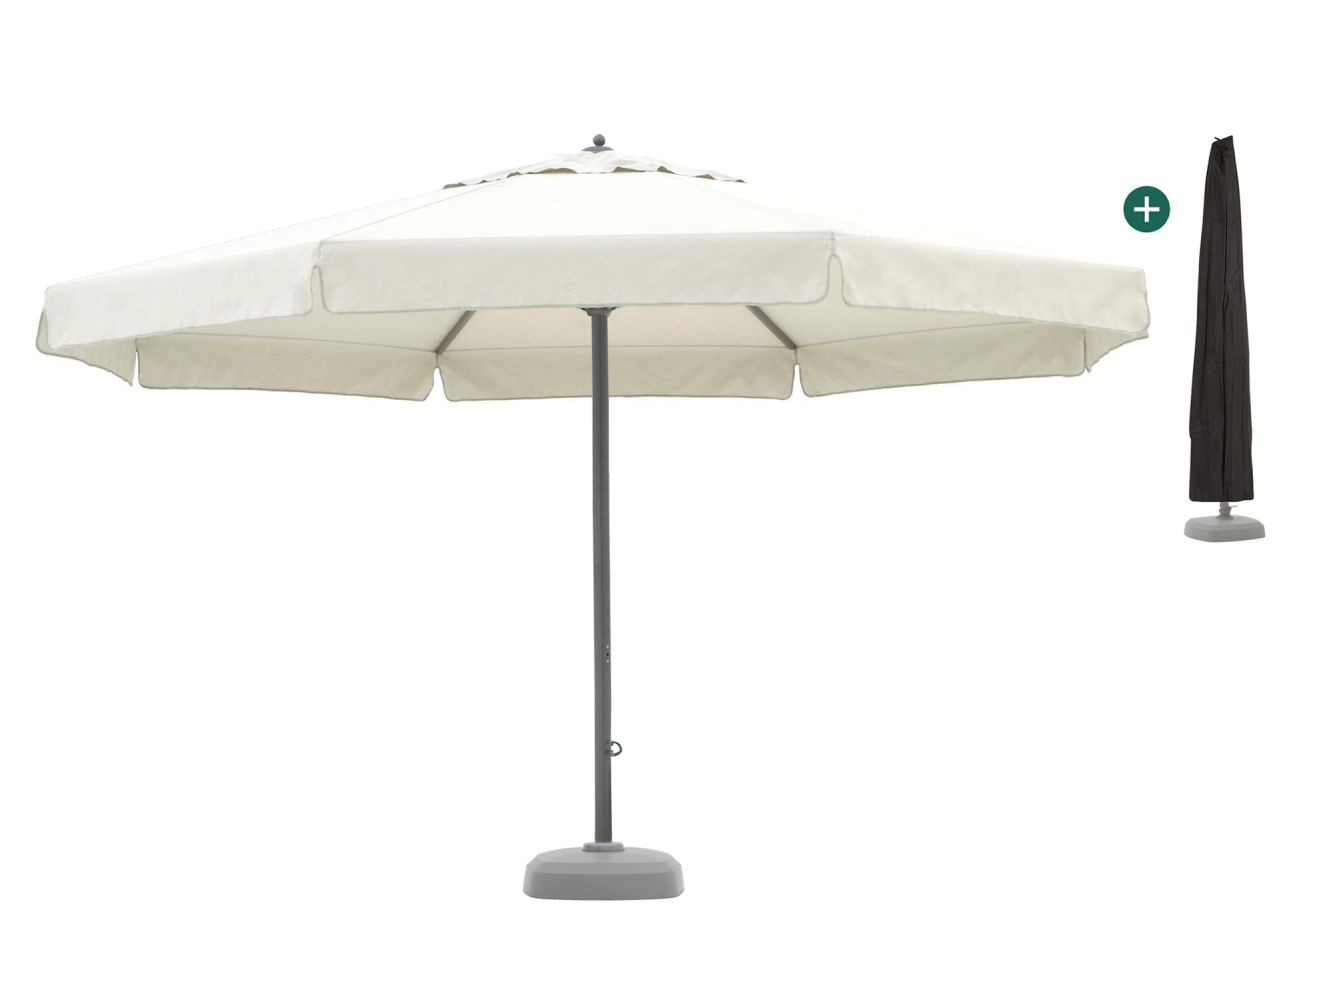 Shadowline Jamaica parasol ø 500cm - Laagste prijsgarantie!